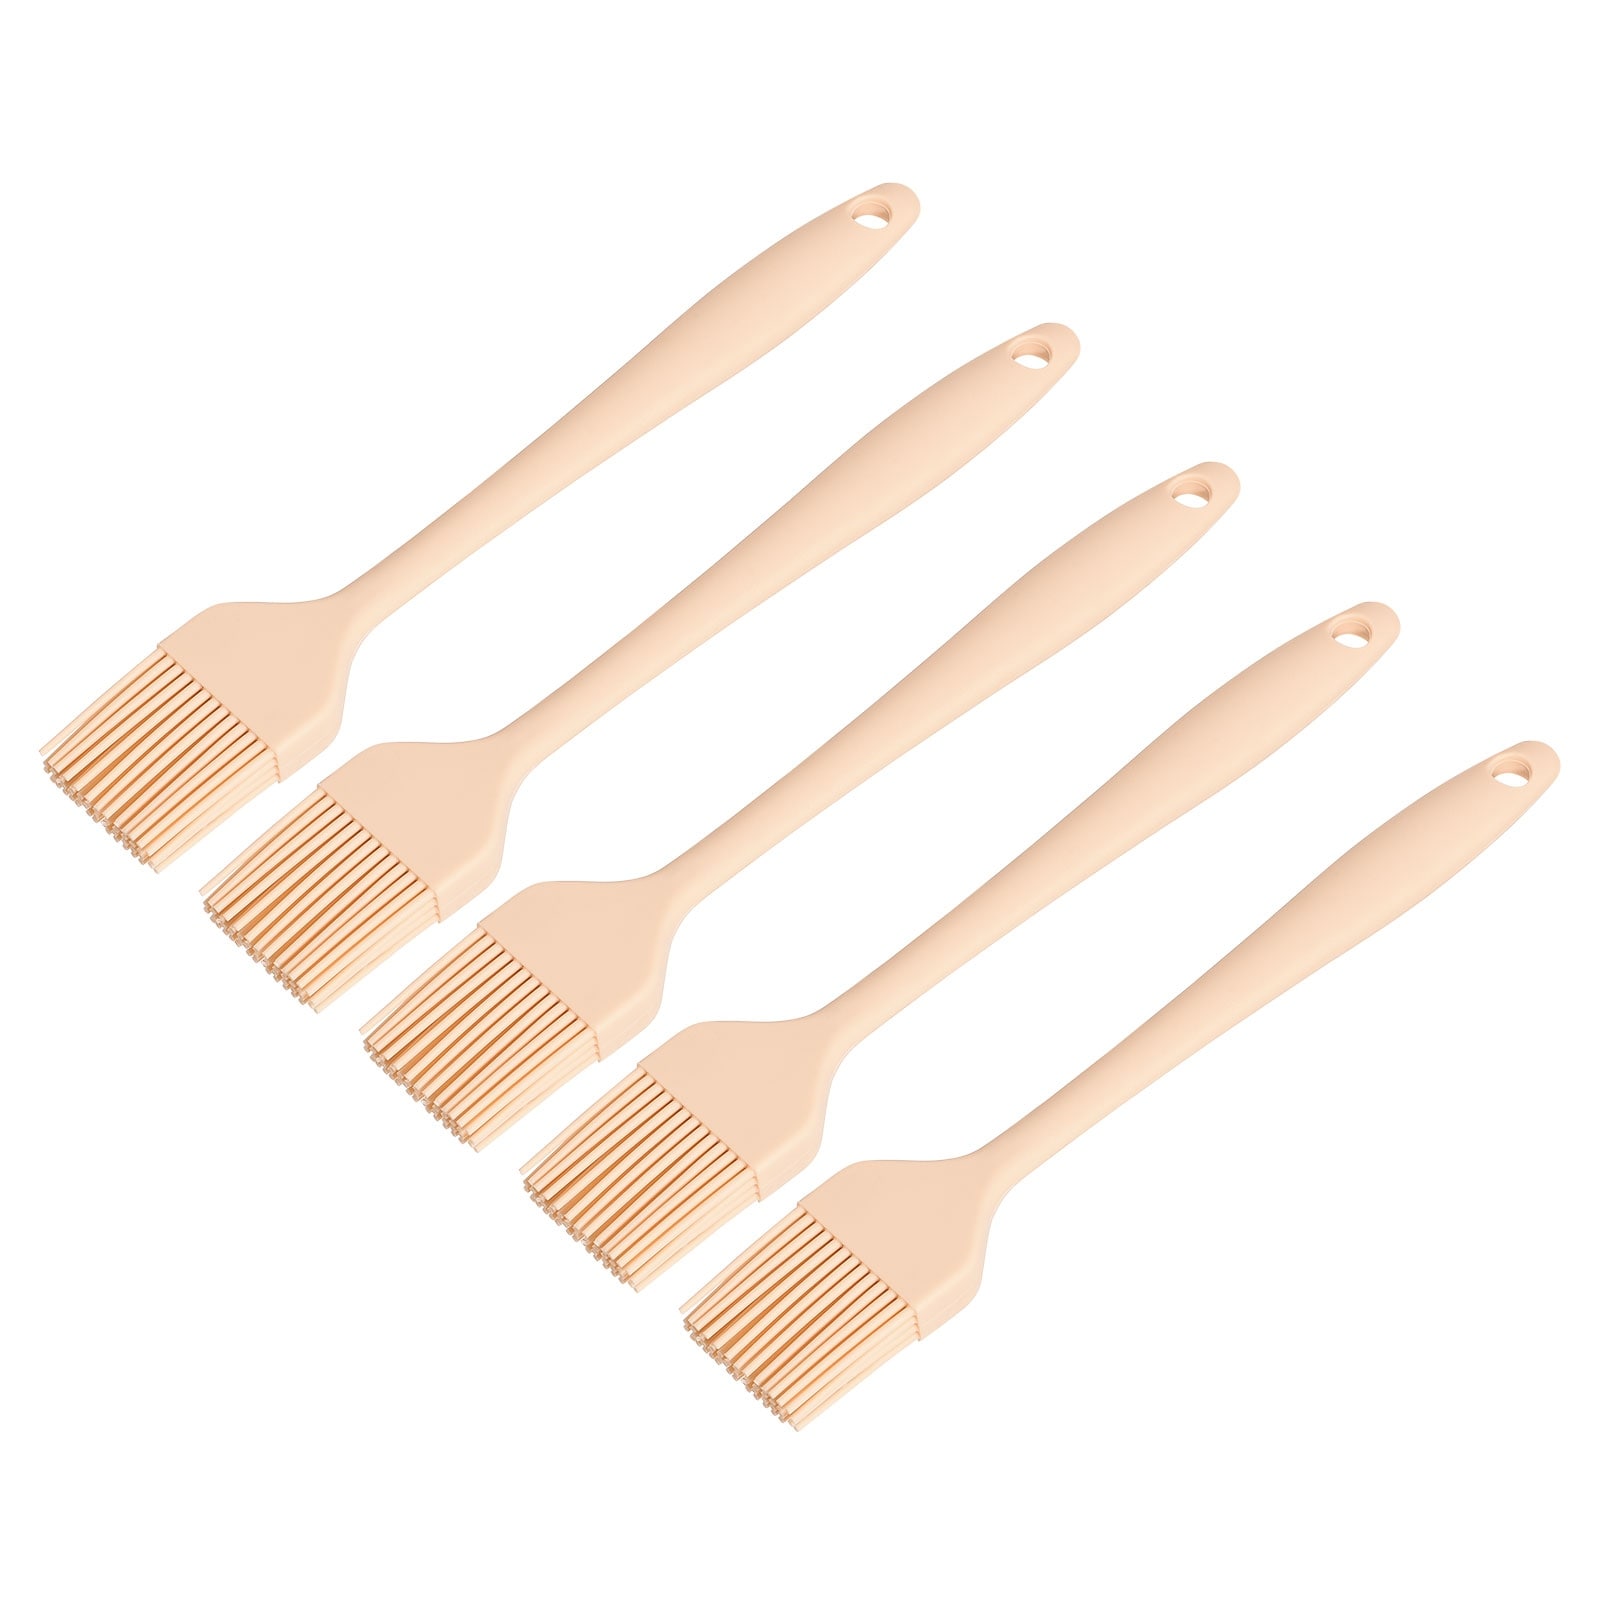 Basting Pastry Brush, 8undefined Silicone Flexible Brushes for